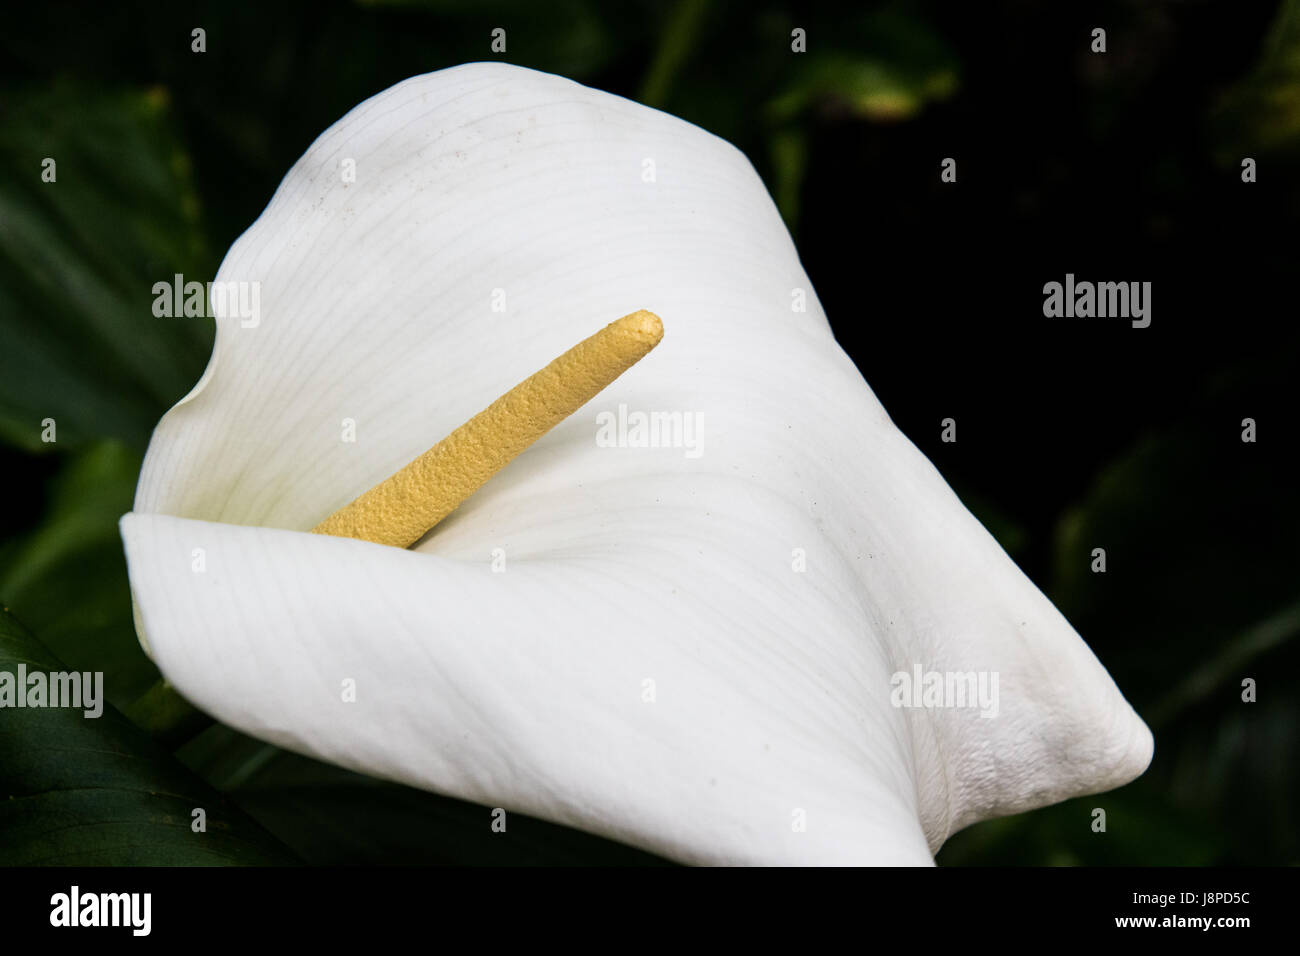 Arum lily, Zantedeschia aethiopica Stock Photo